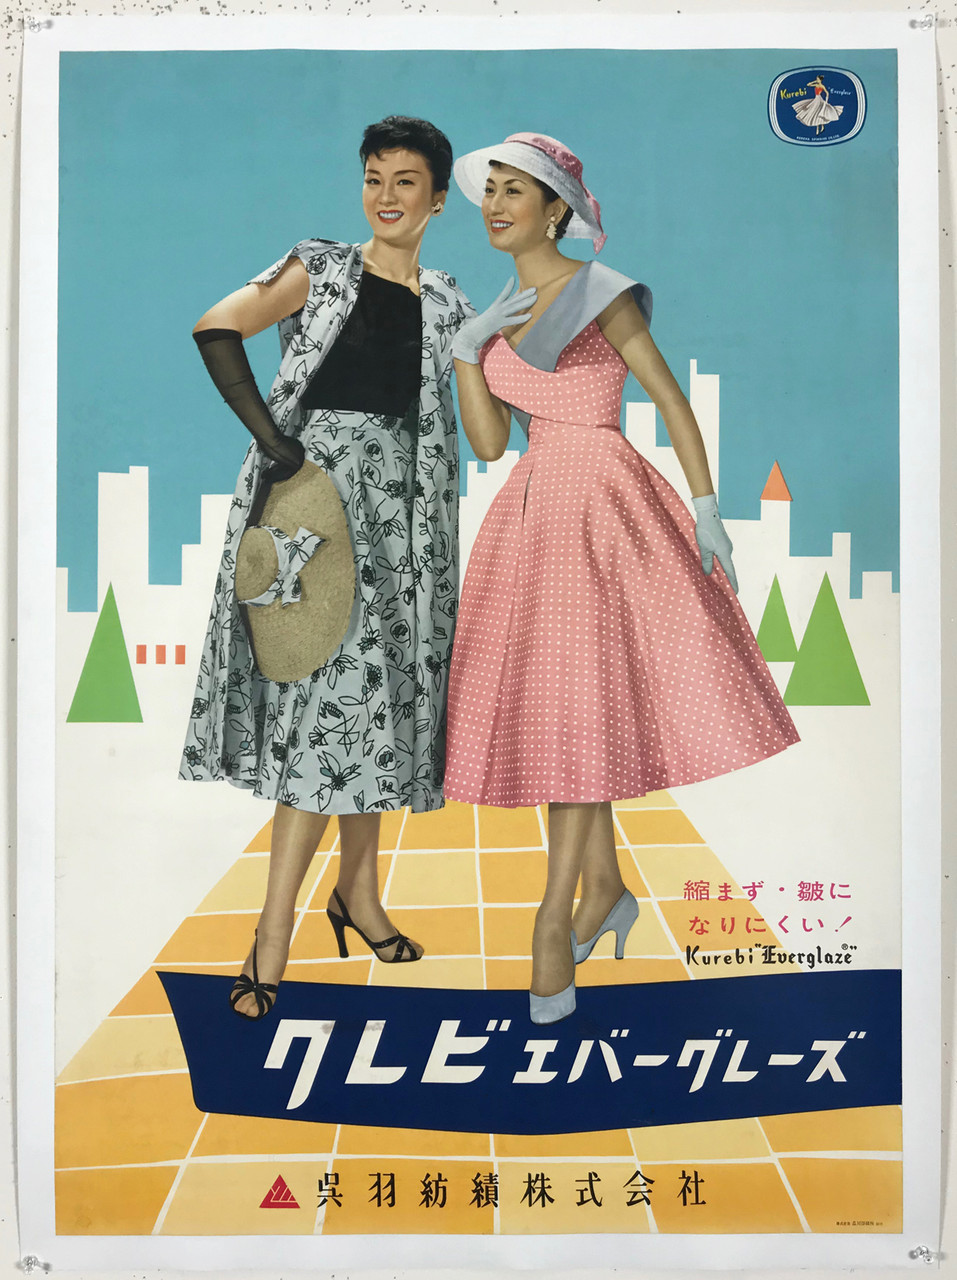 Kurebi Everglaze Fabric Company Original 1950's Vintage Japanese Clothing Supplier Company Advertisement Poster Linen Backed.